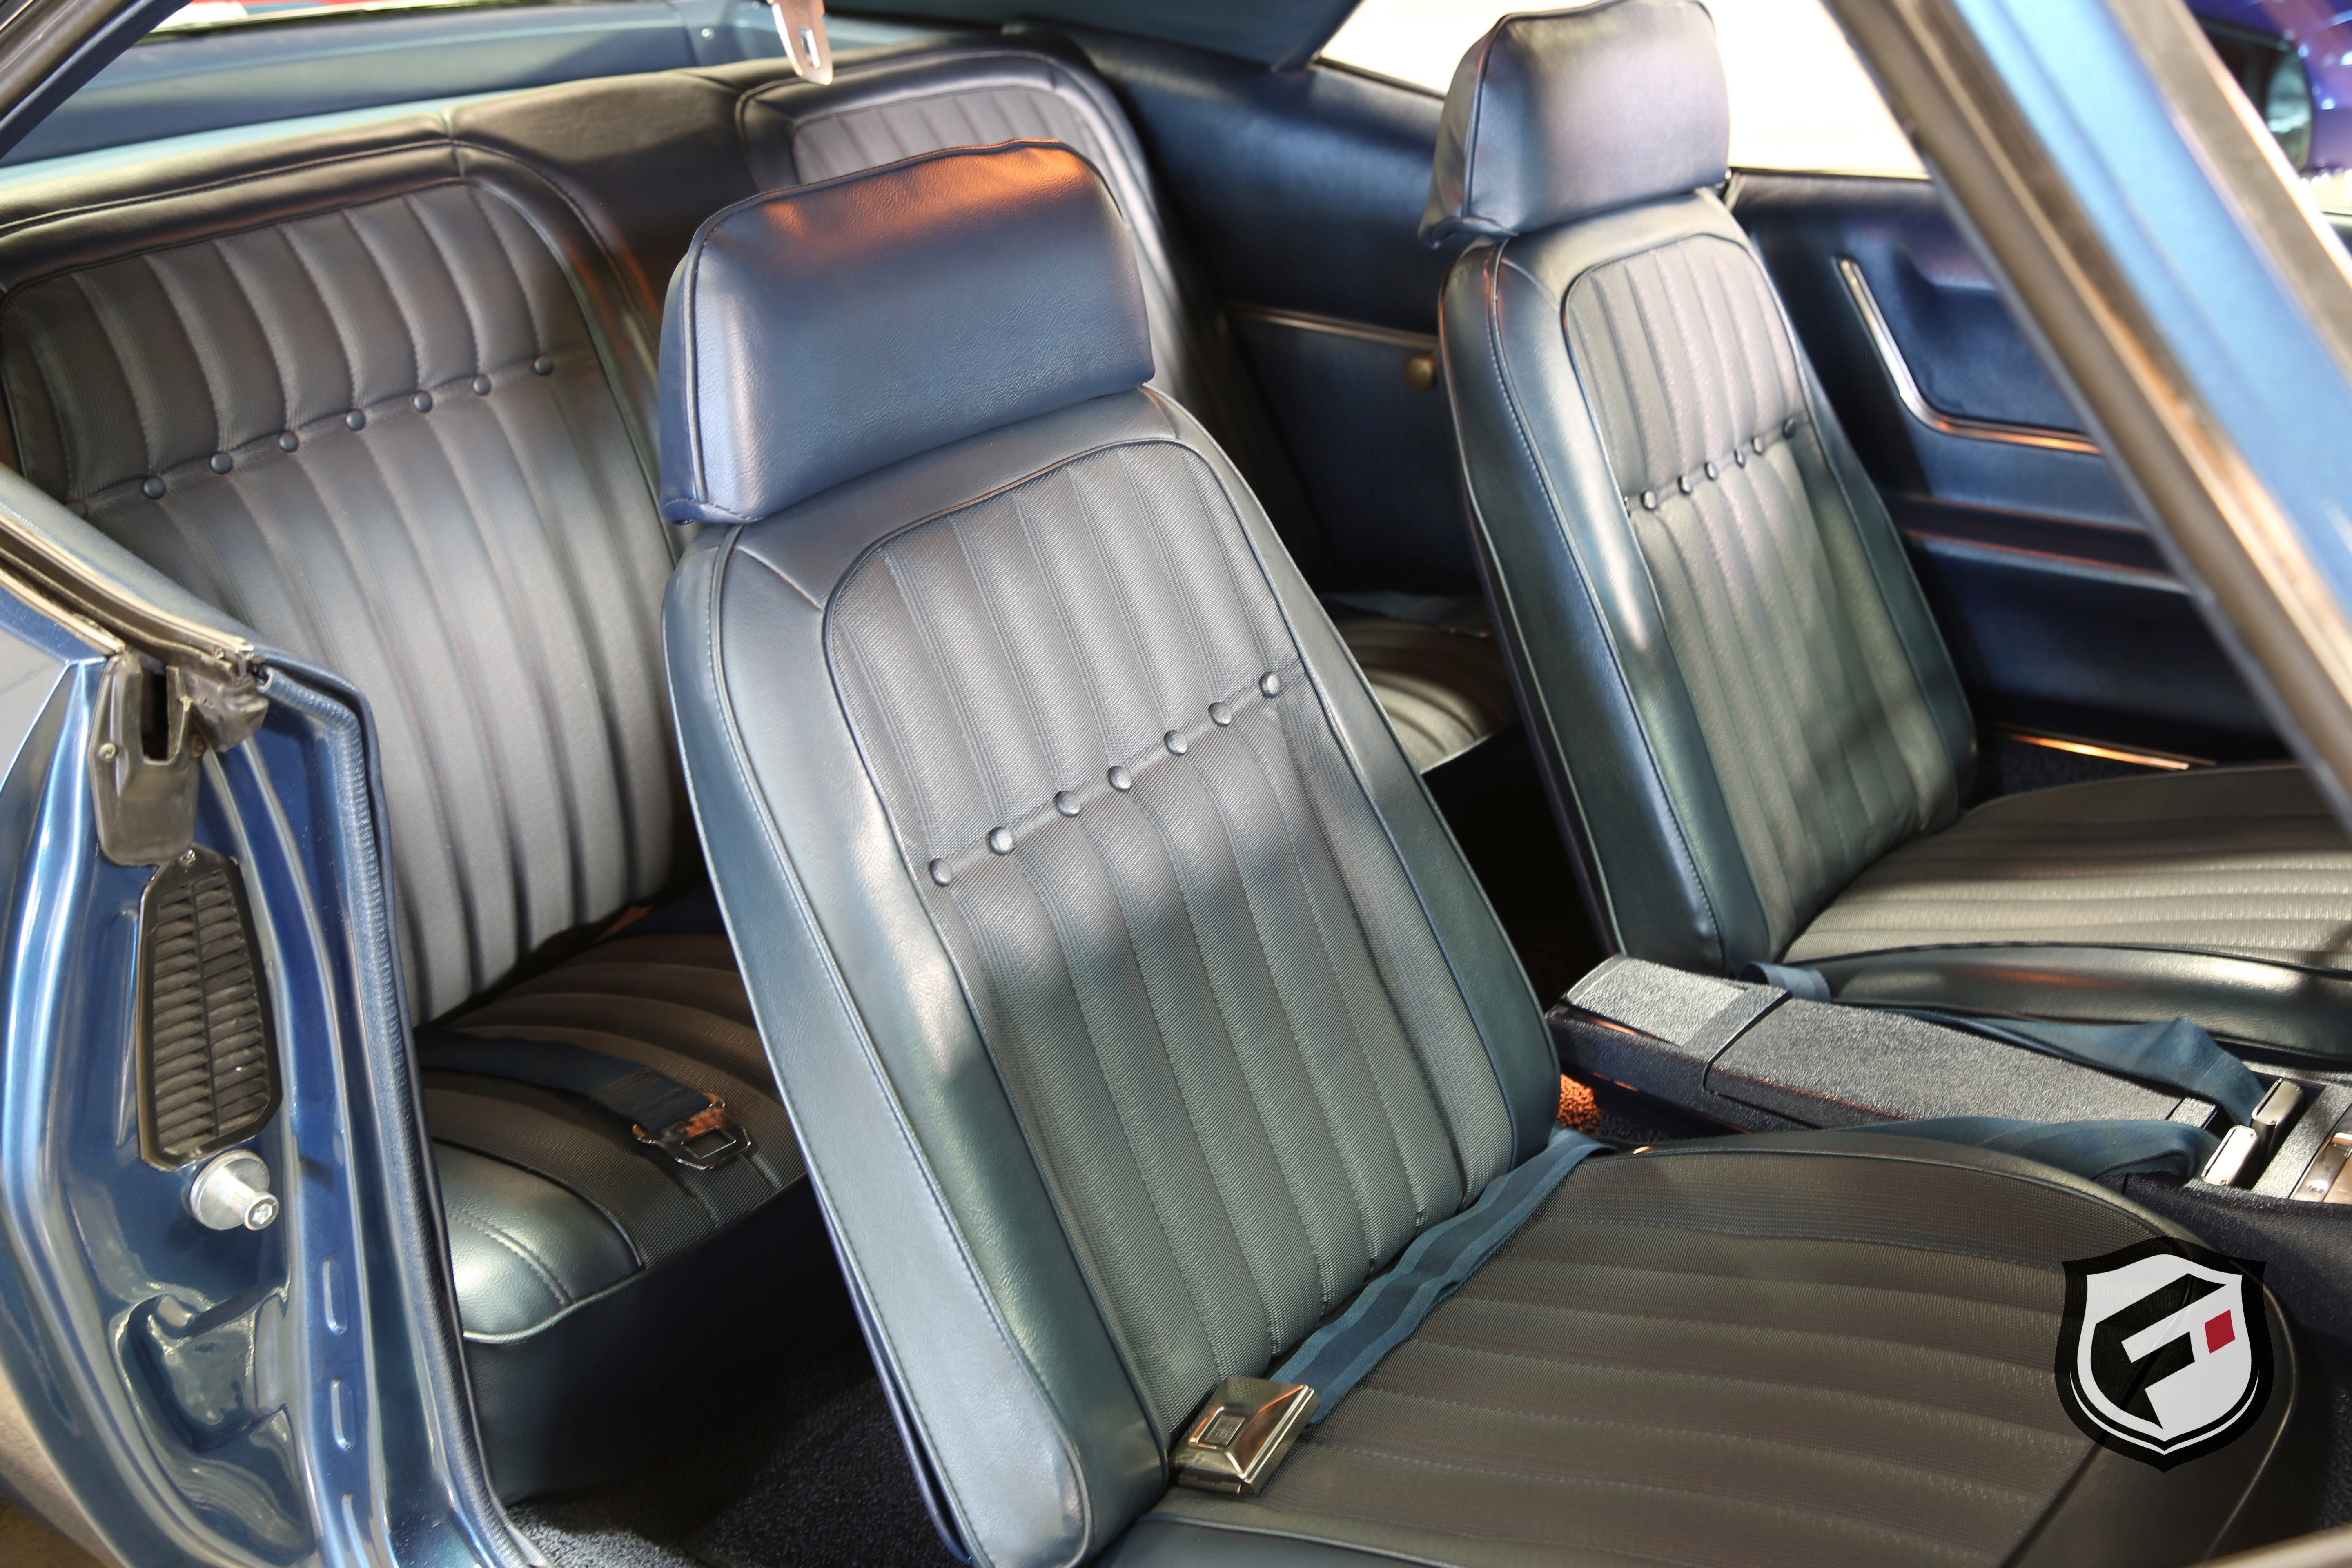 1969 Chevrolet Camaro Fusion Luxury Motors